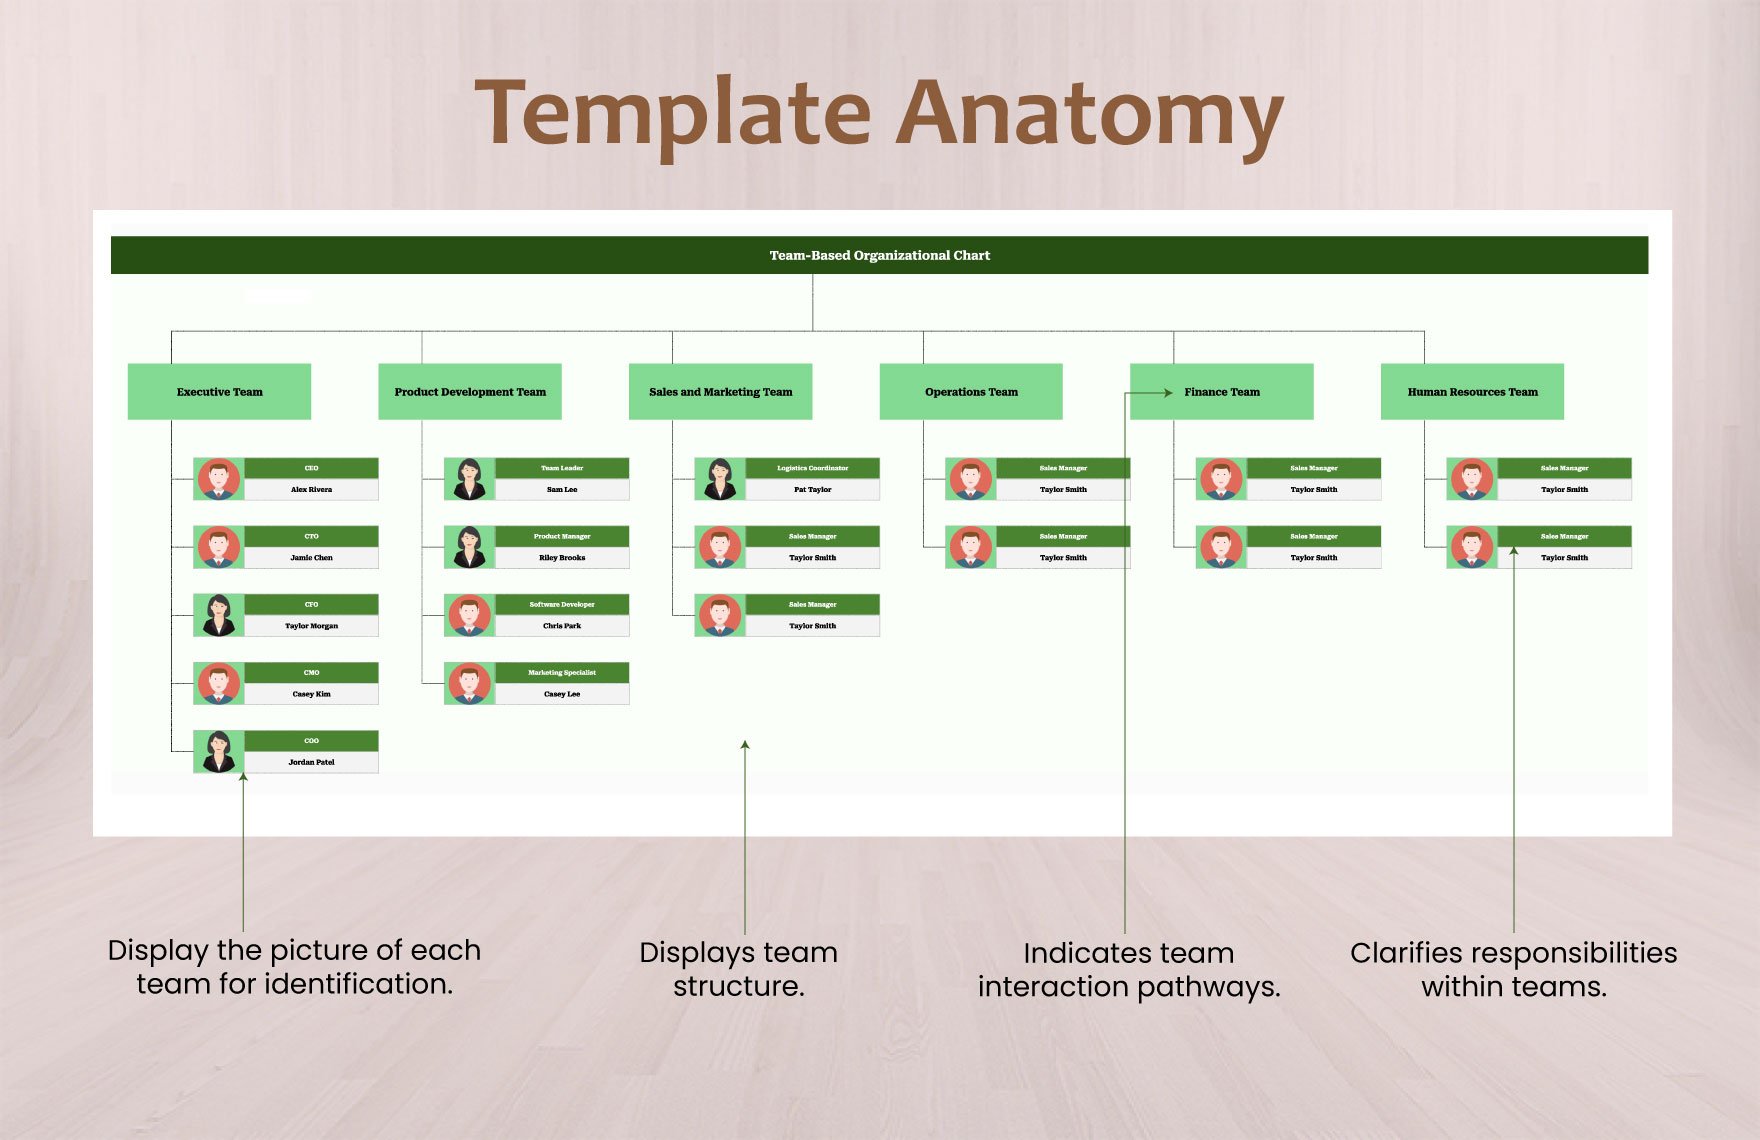 Team-Based Organizational Chart Template